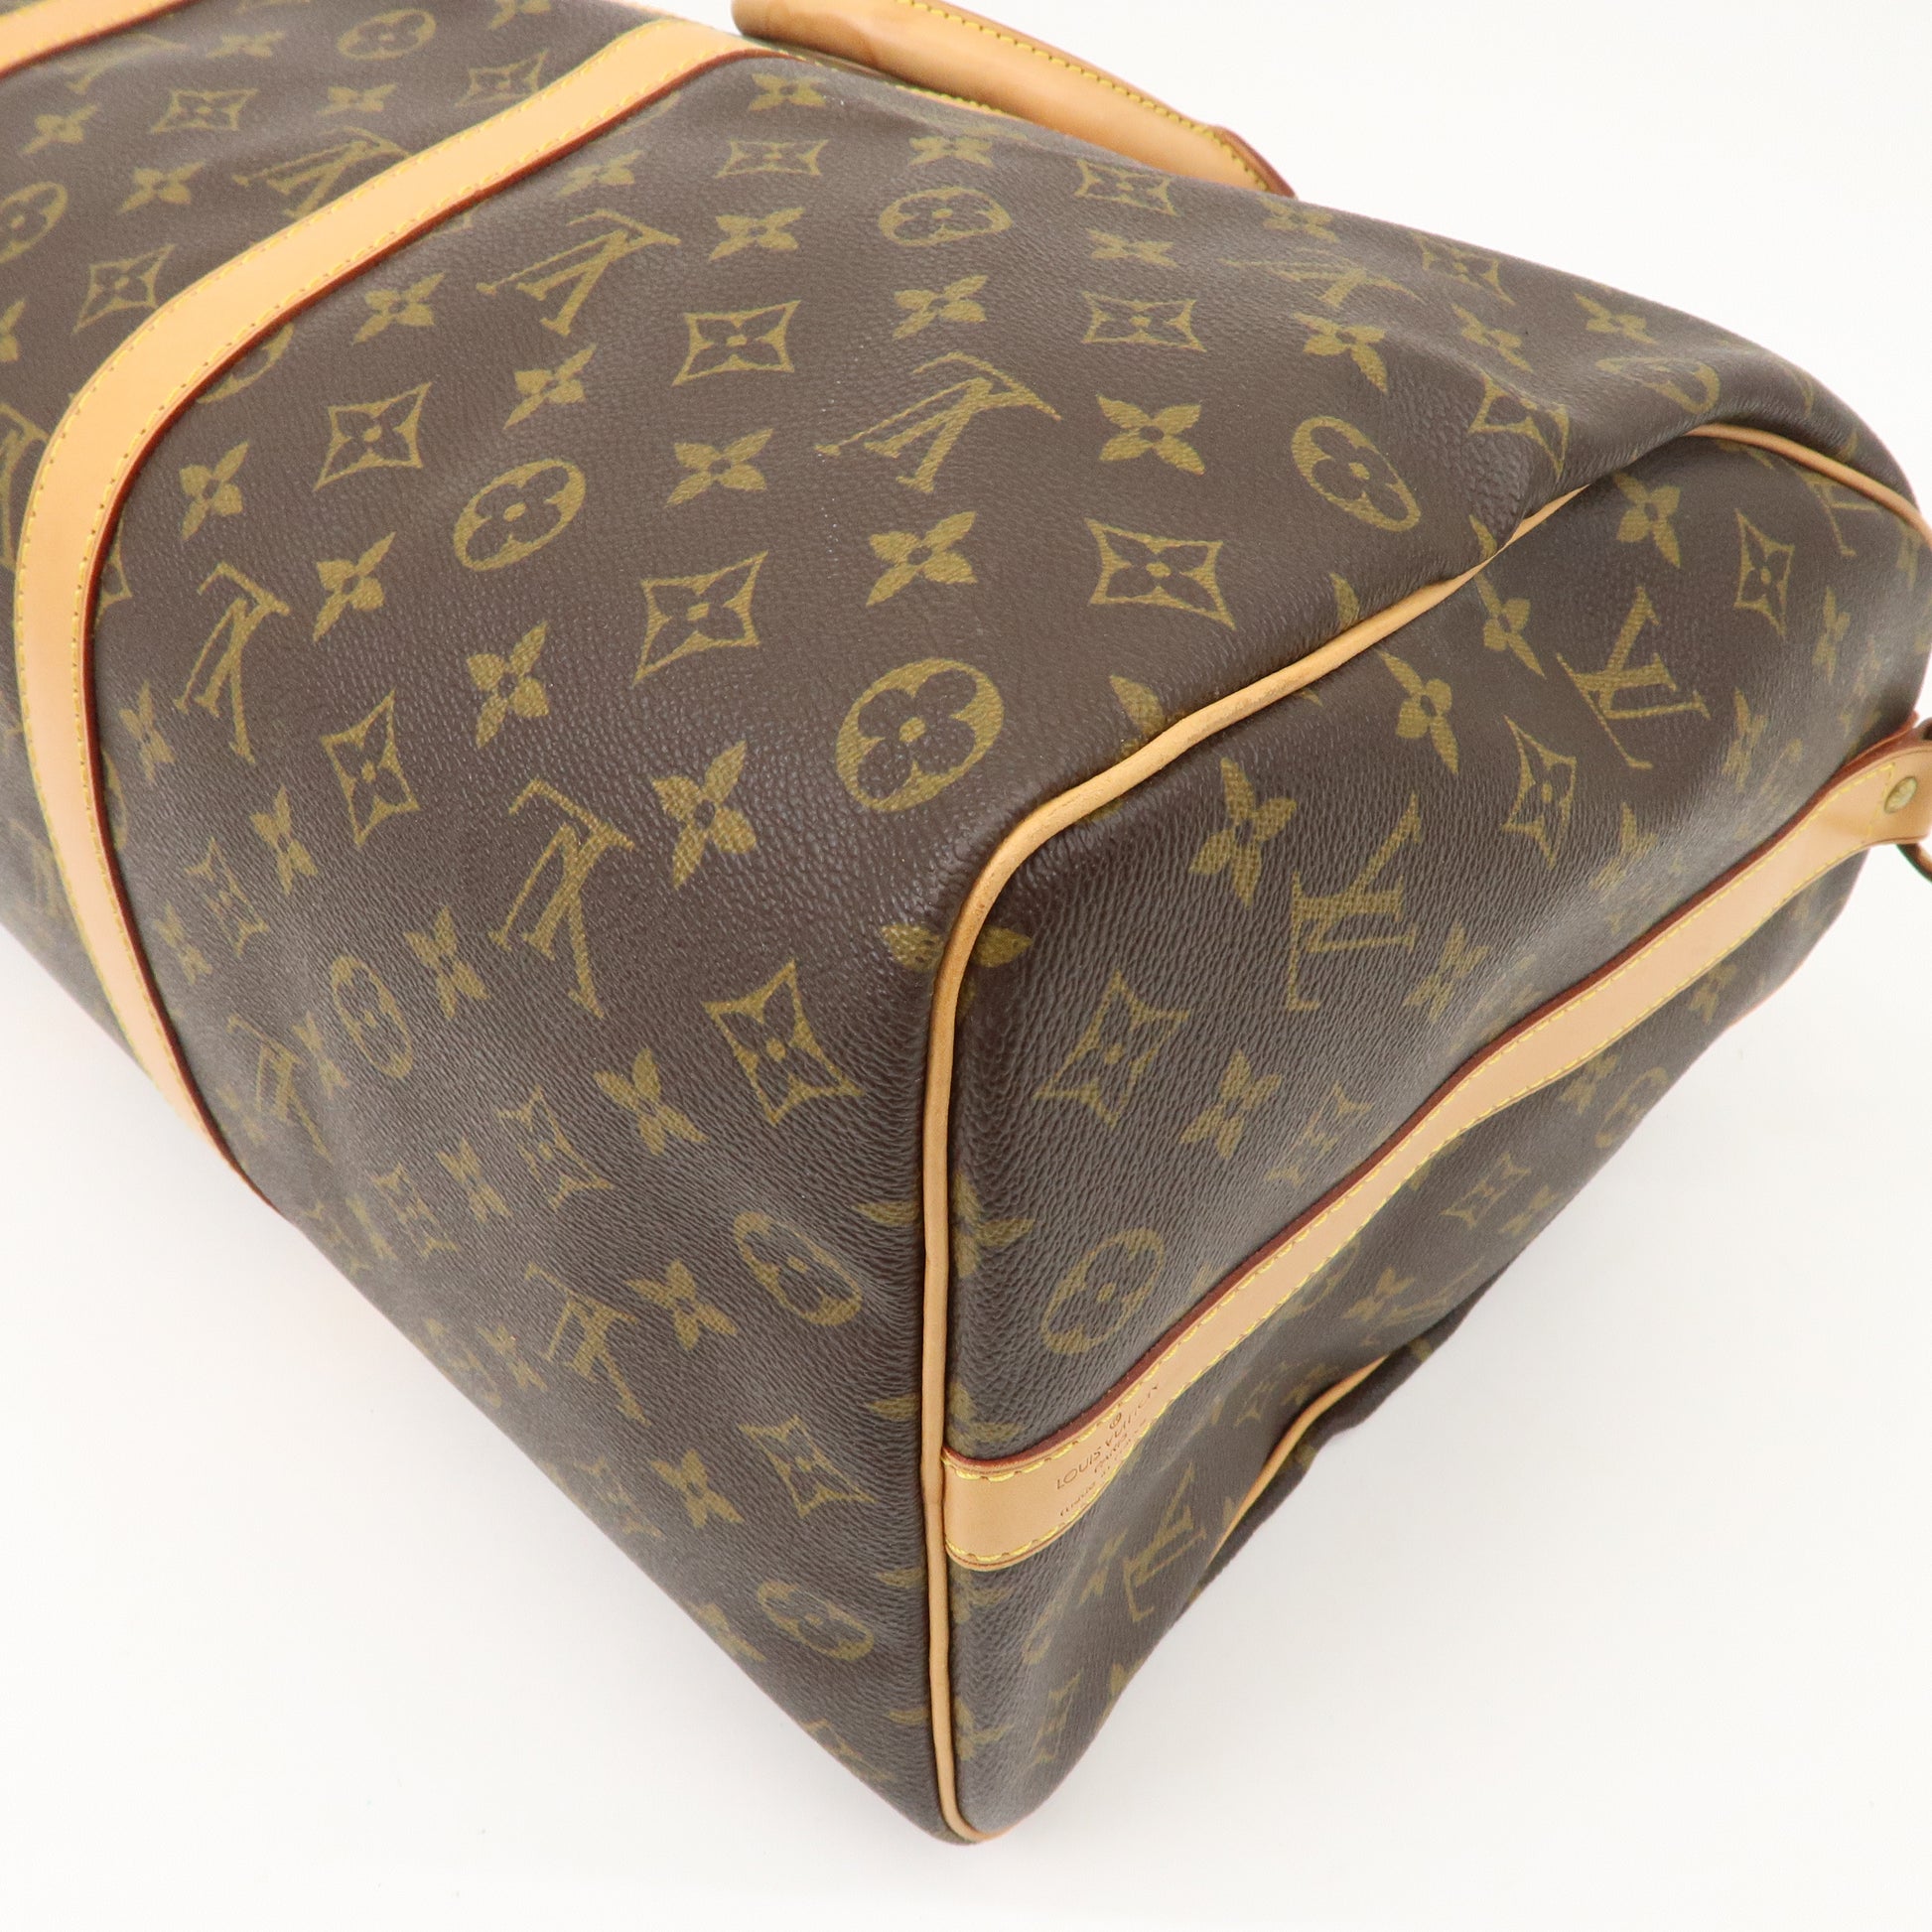 Louis Vuitton Vintage Monogram Keepall 50 - Brown Luggage and